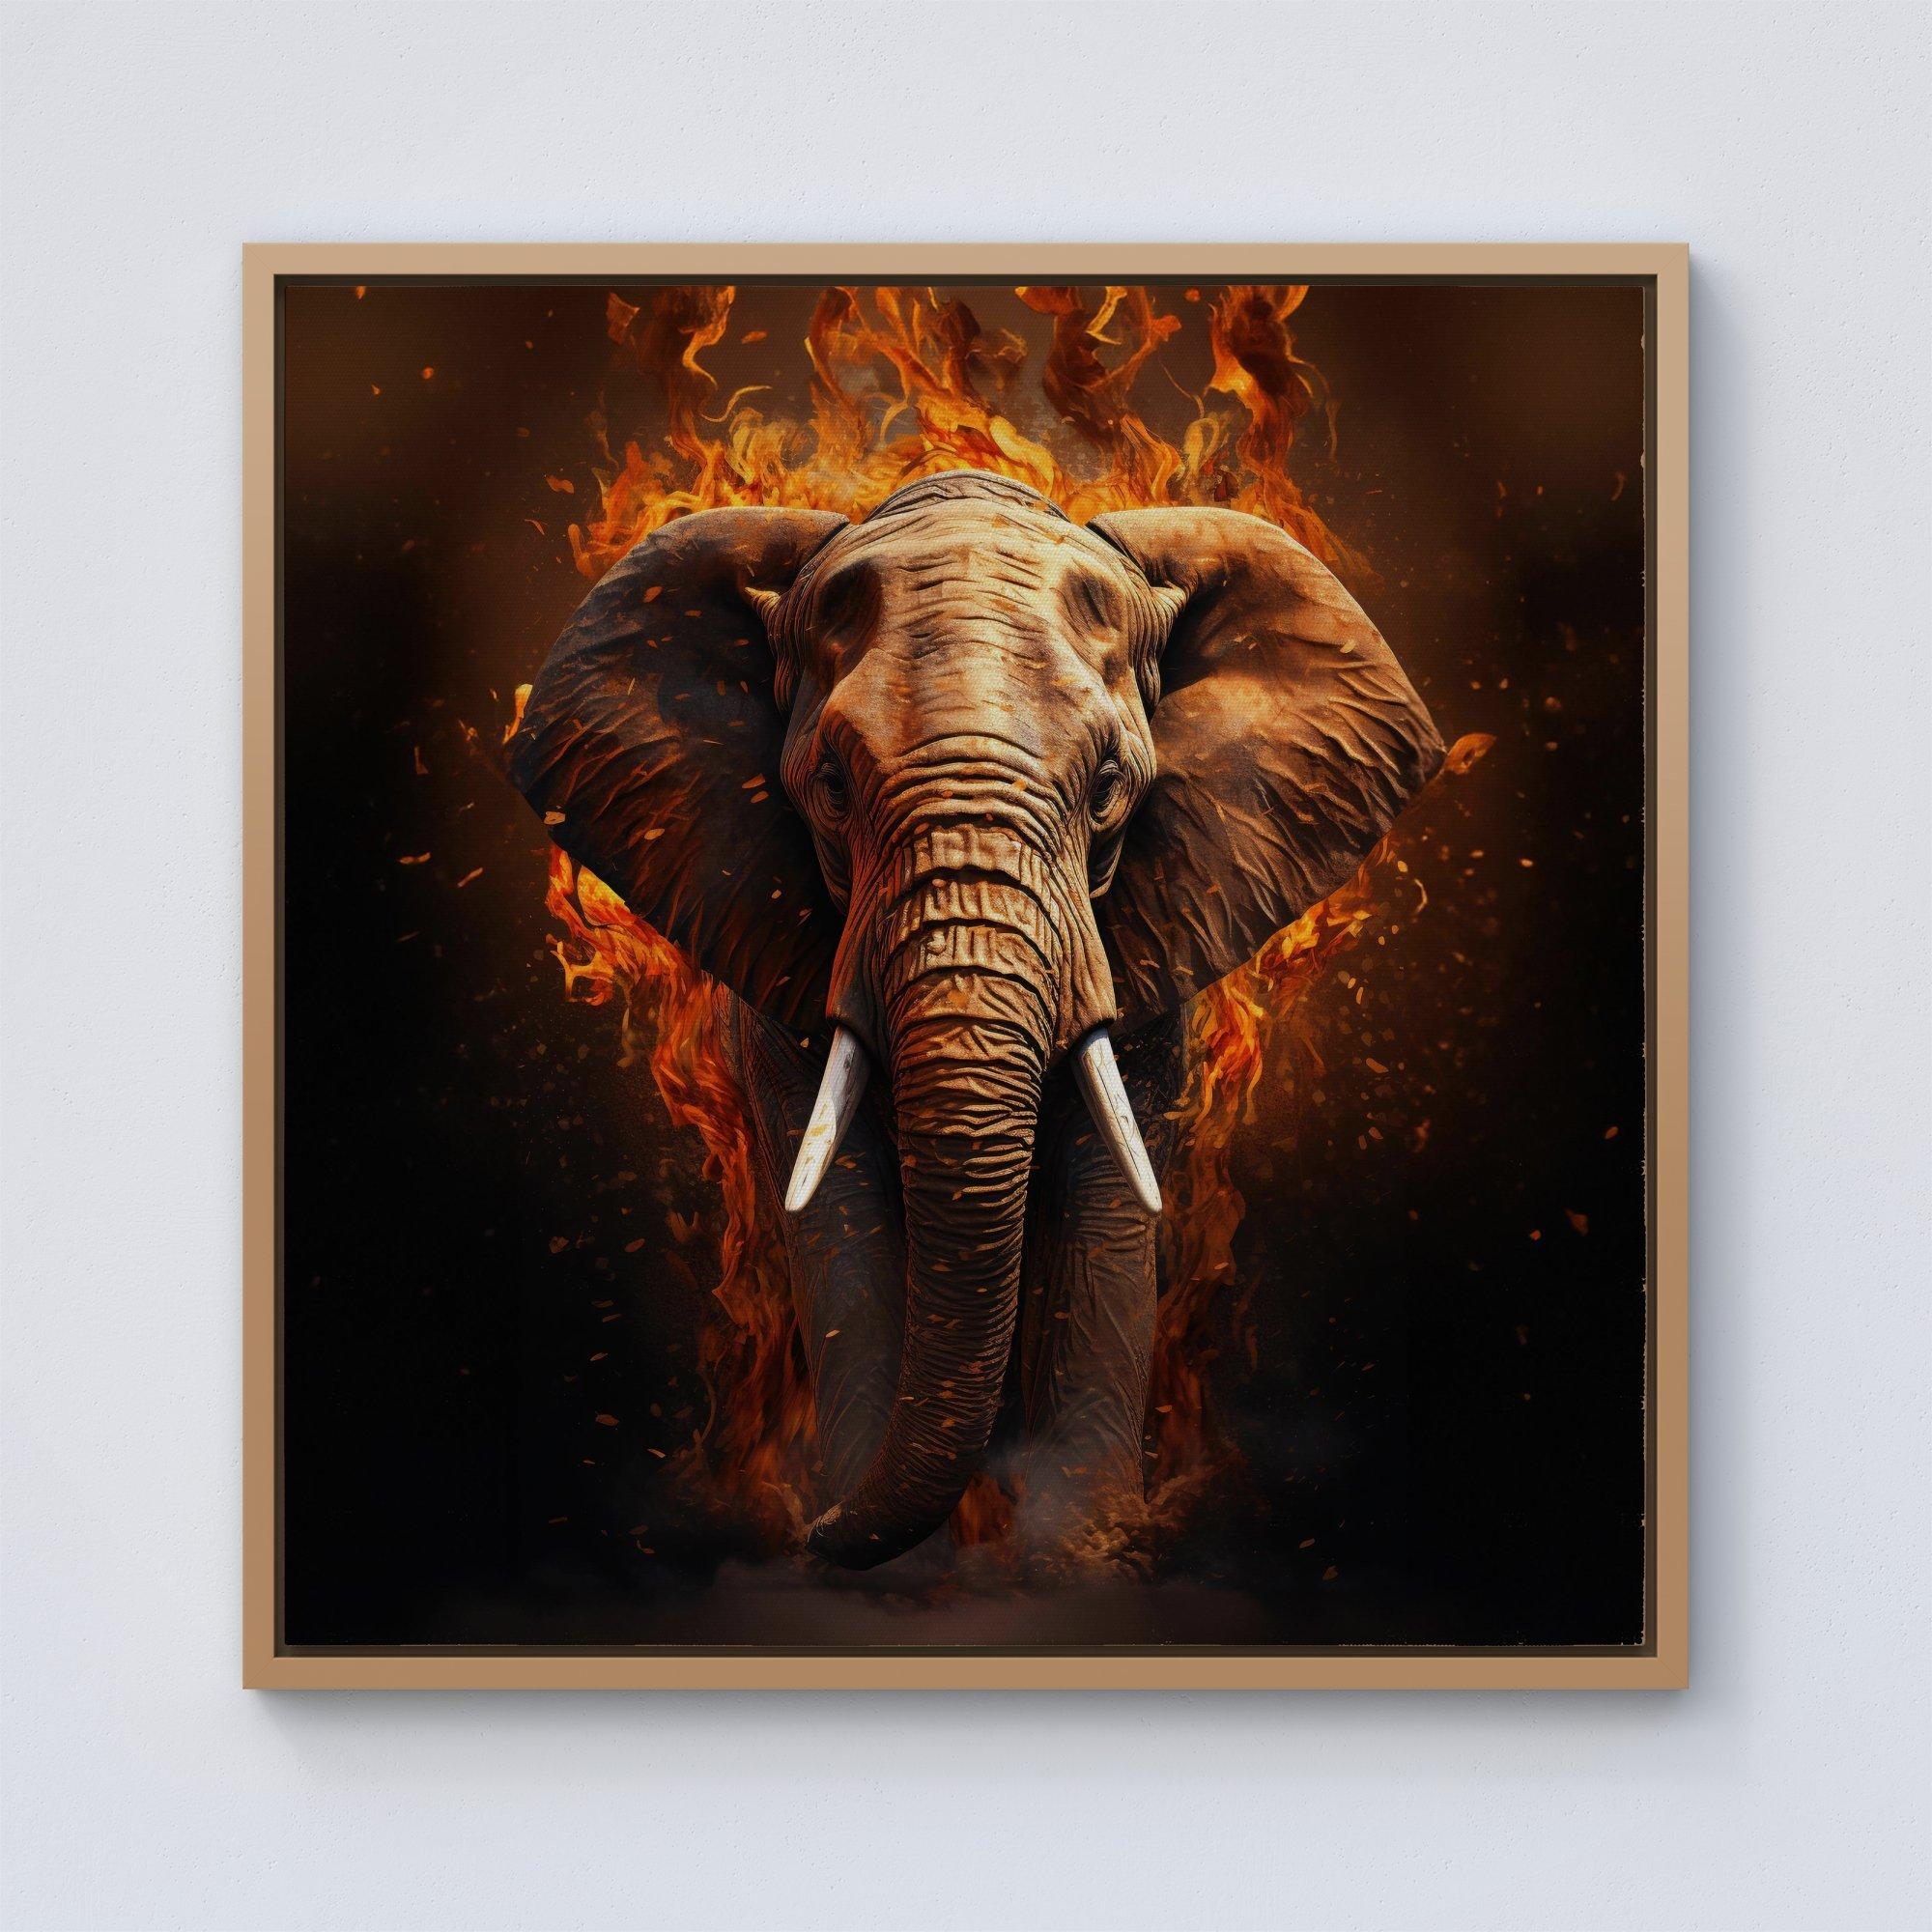 Splashart Elephant and fire Framed Canvas